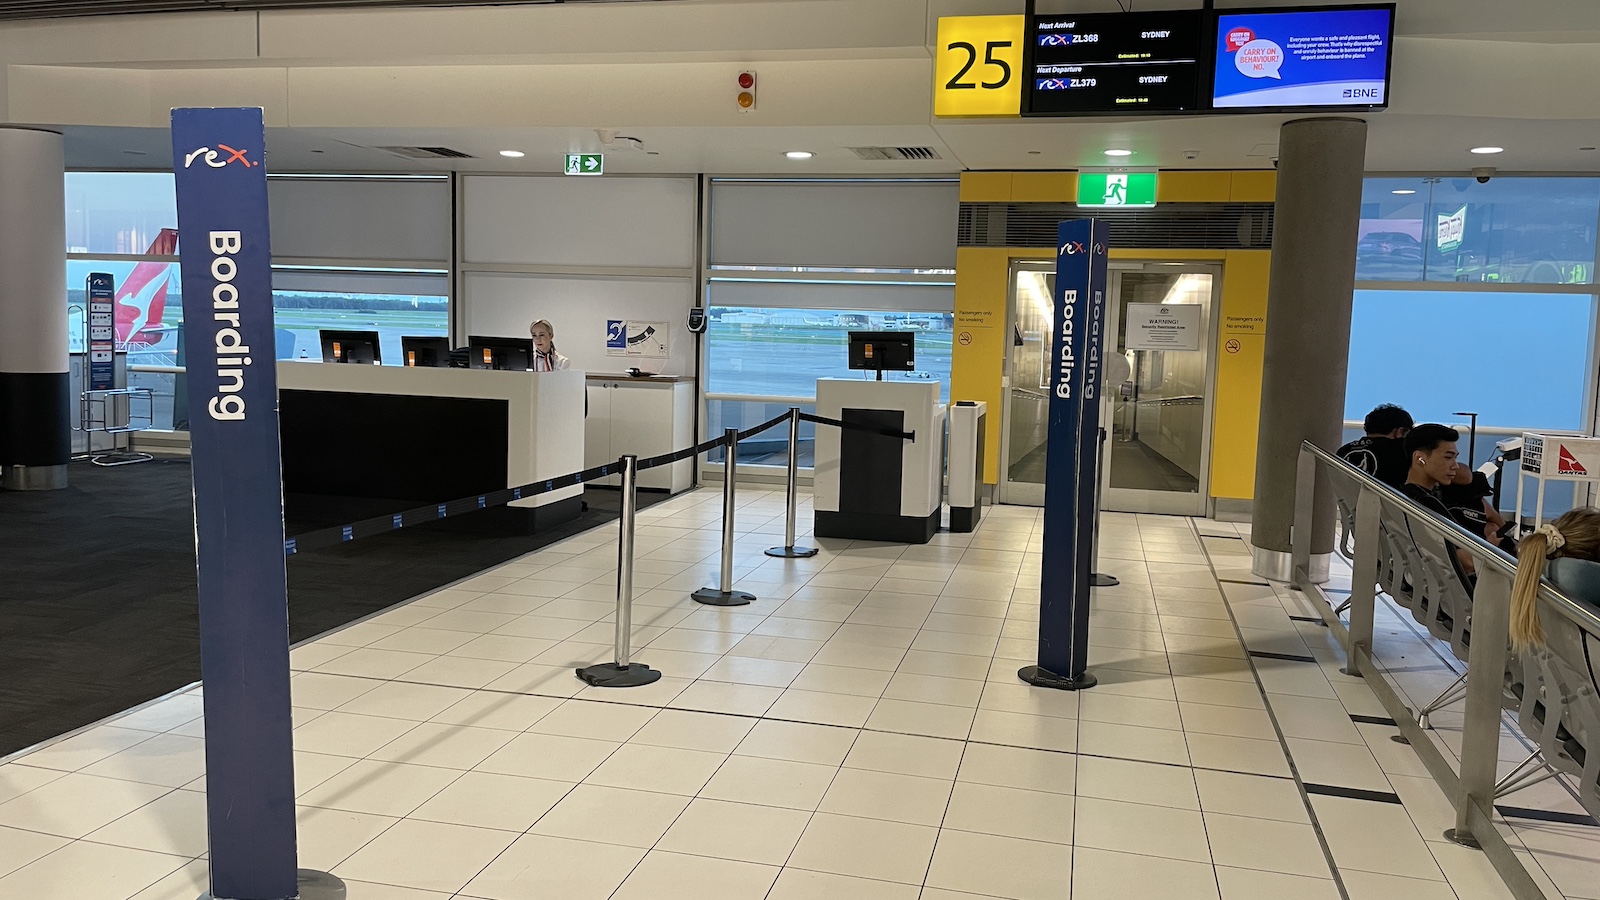 Rex Airlines Brisbane to Sydney Brisbane Airport Gate Boarding Signs Point Hacks